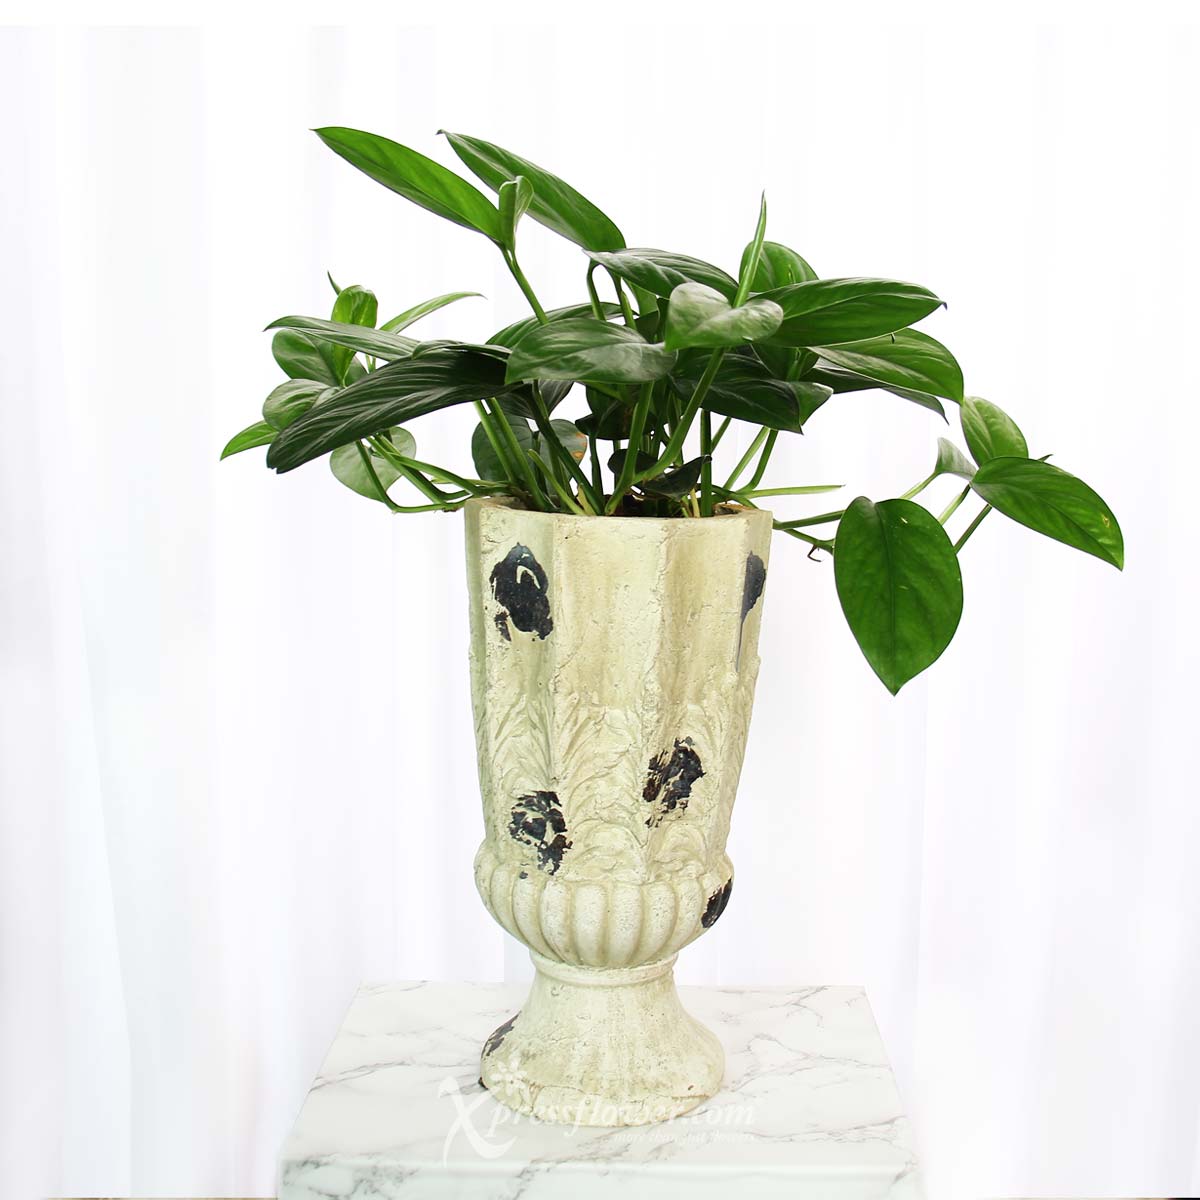 Flourishing Renaissance (Epipremnum Pinnatum Plant)